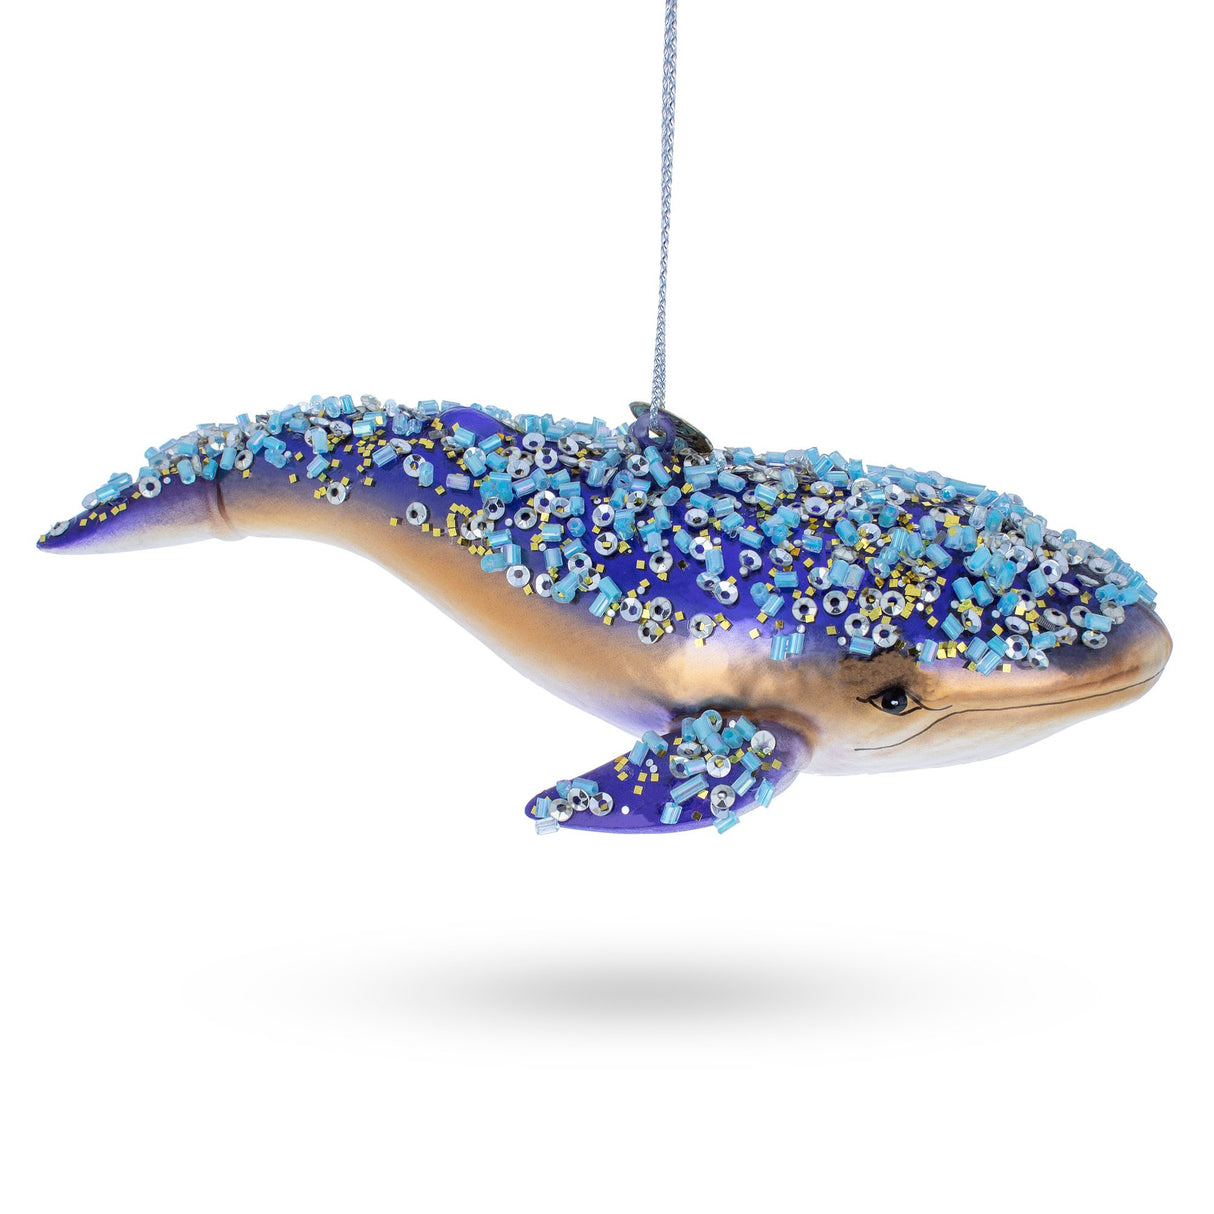 Majestic Blue Whale - Blown Glass Christmas Ornament in Blue color,  shape